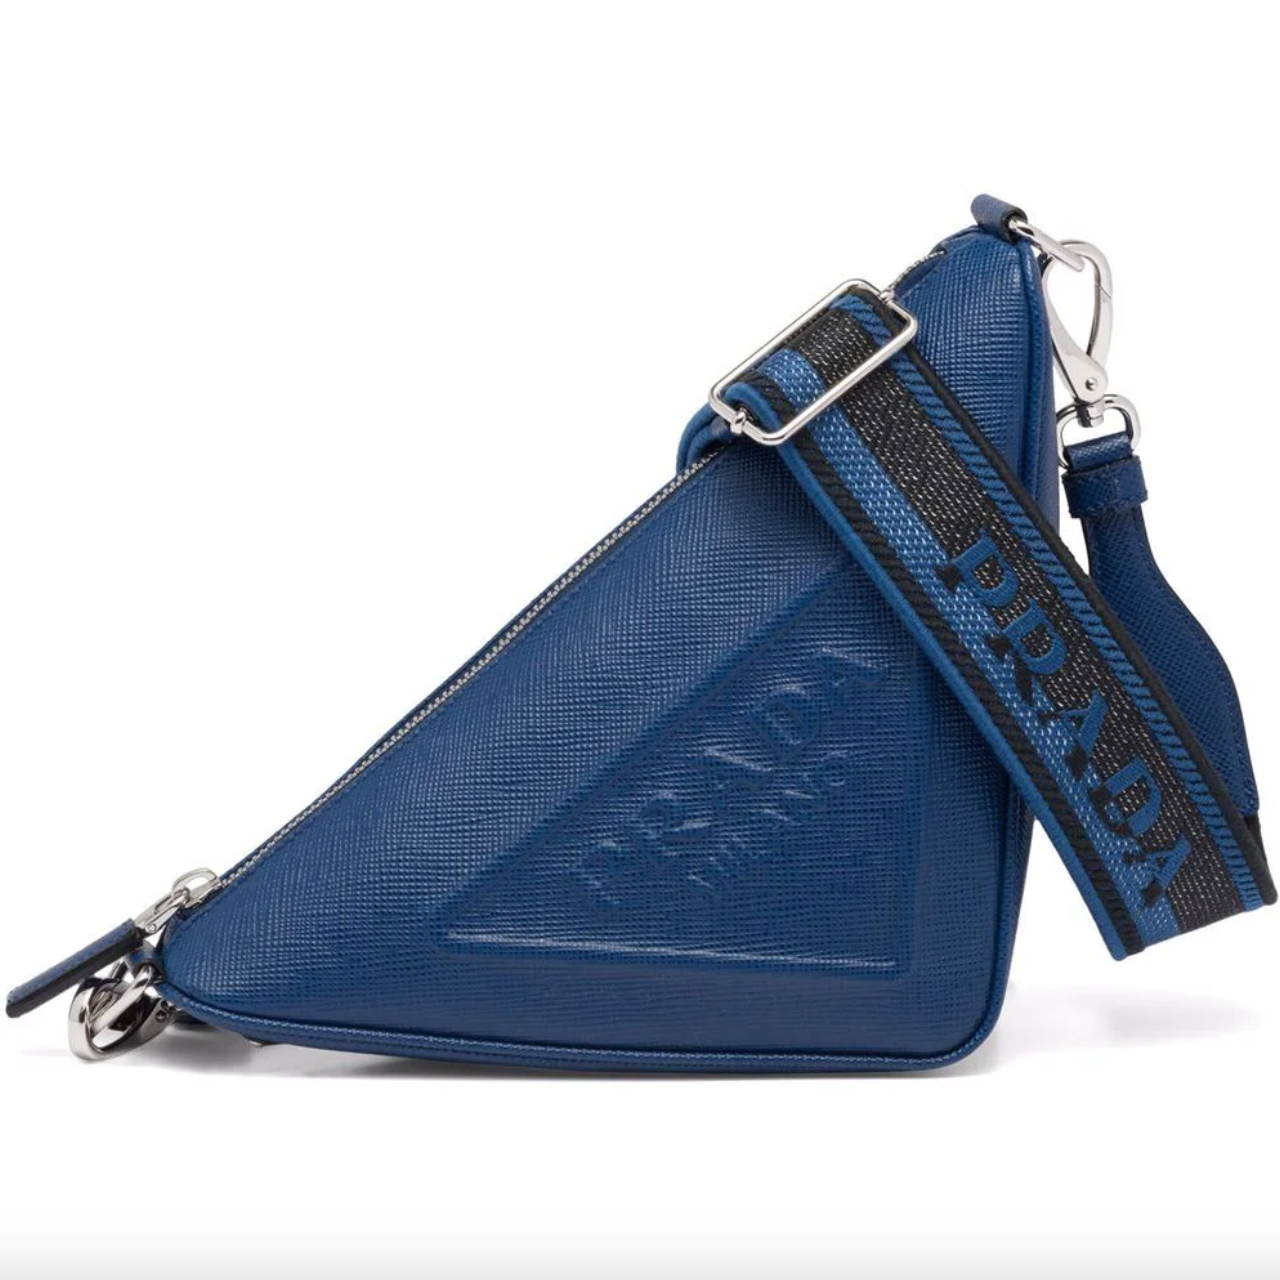 prada blue leather bag